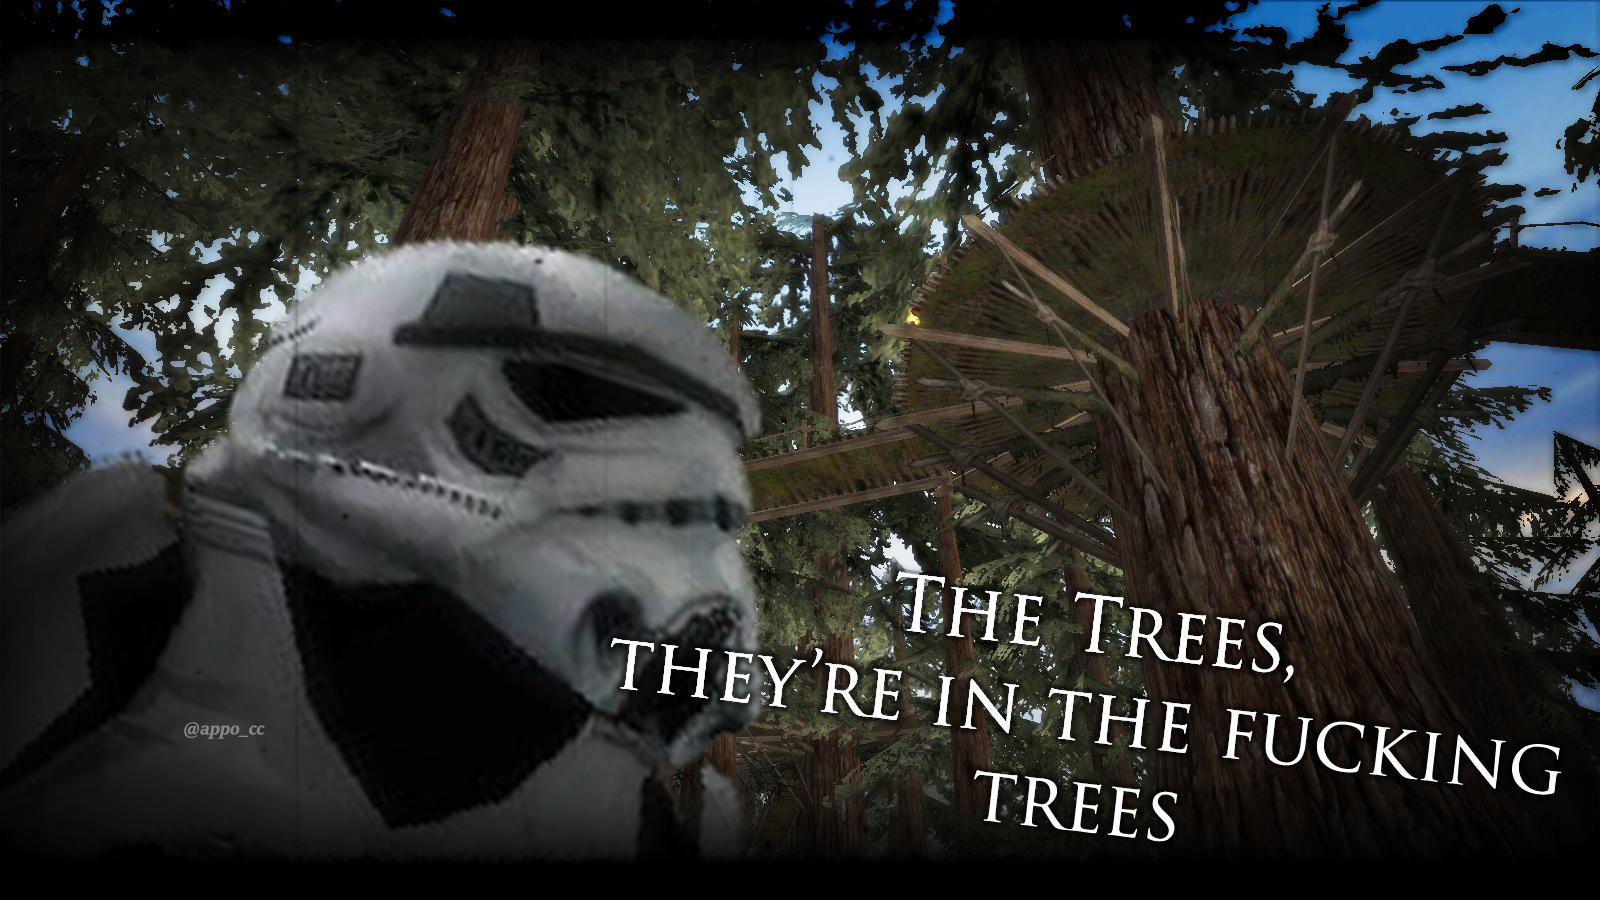 ot-memes star-wars-memes ot-memes text: frHE TREES, THEY'Rfr1N4THE FUCKING TREES 